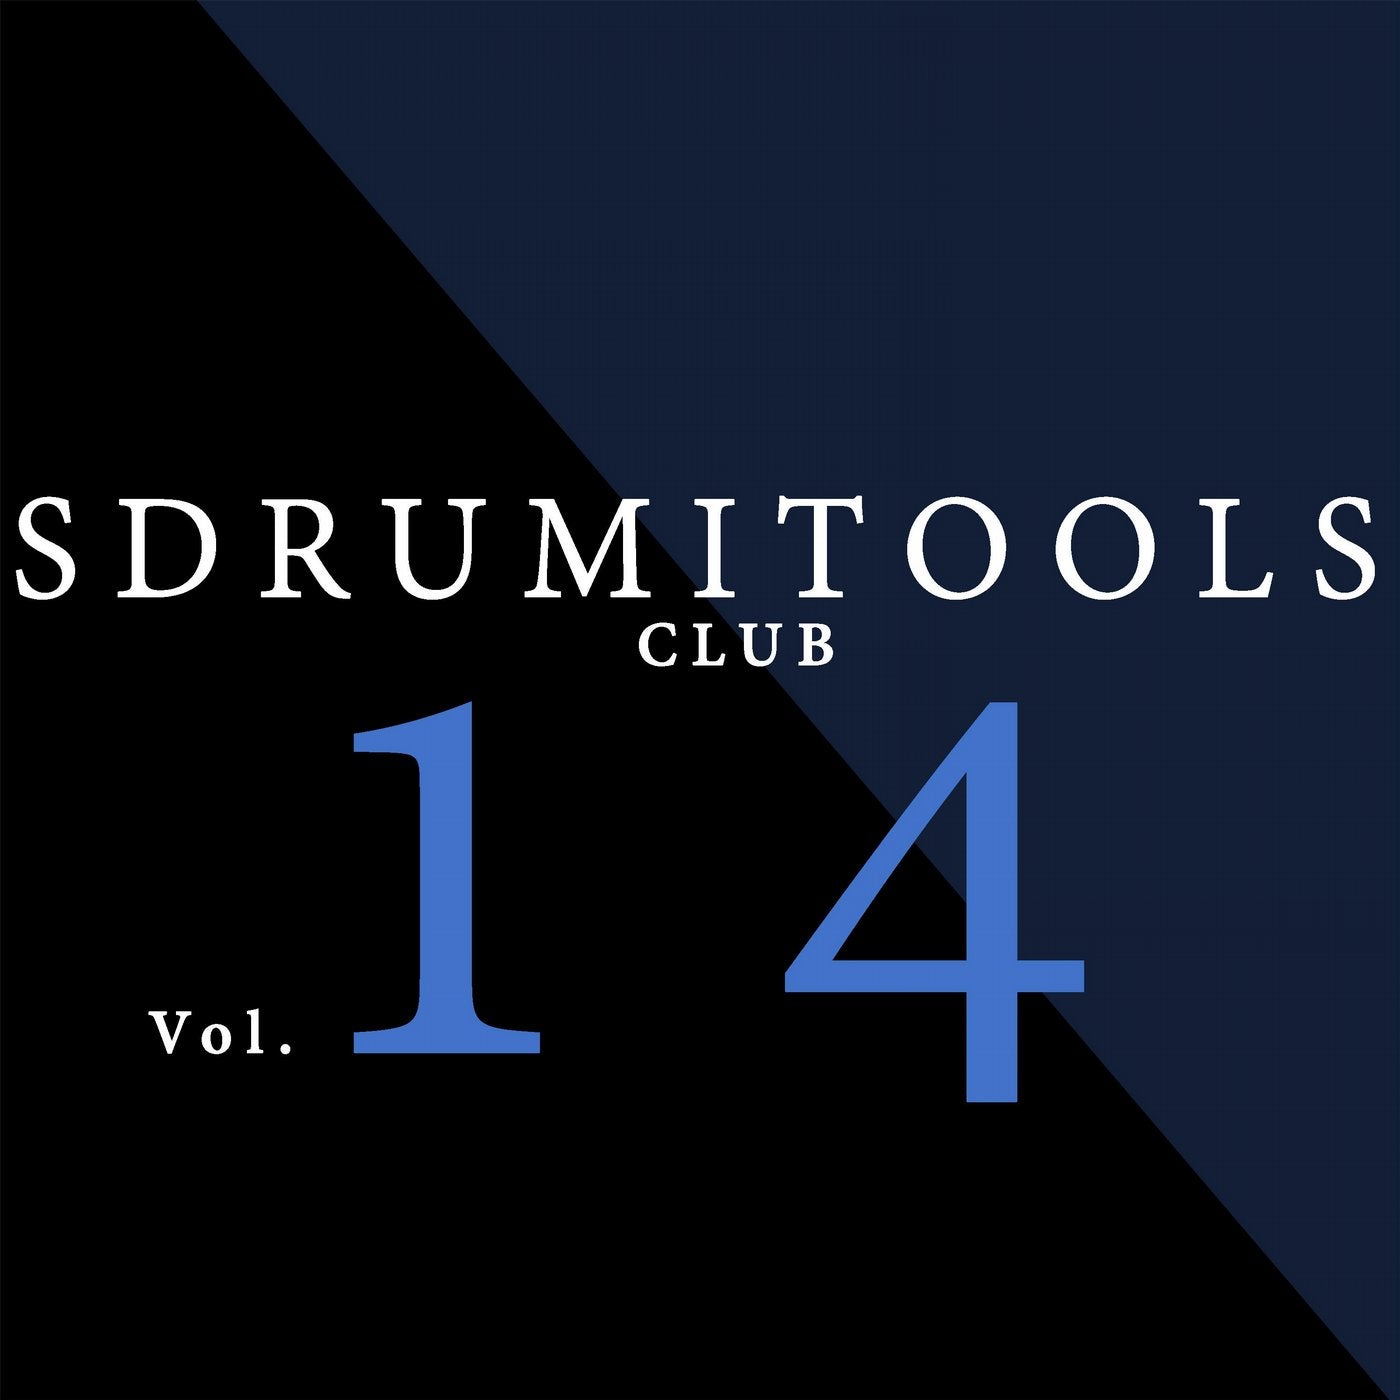 SDRUMITOOLS CLUB Vol.14